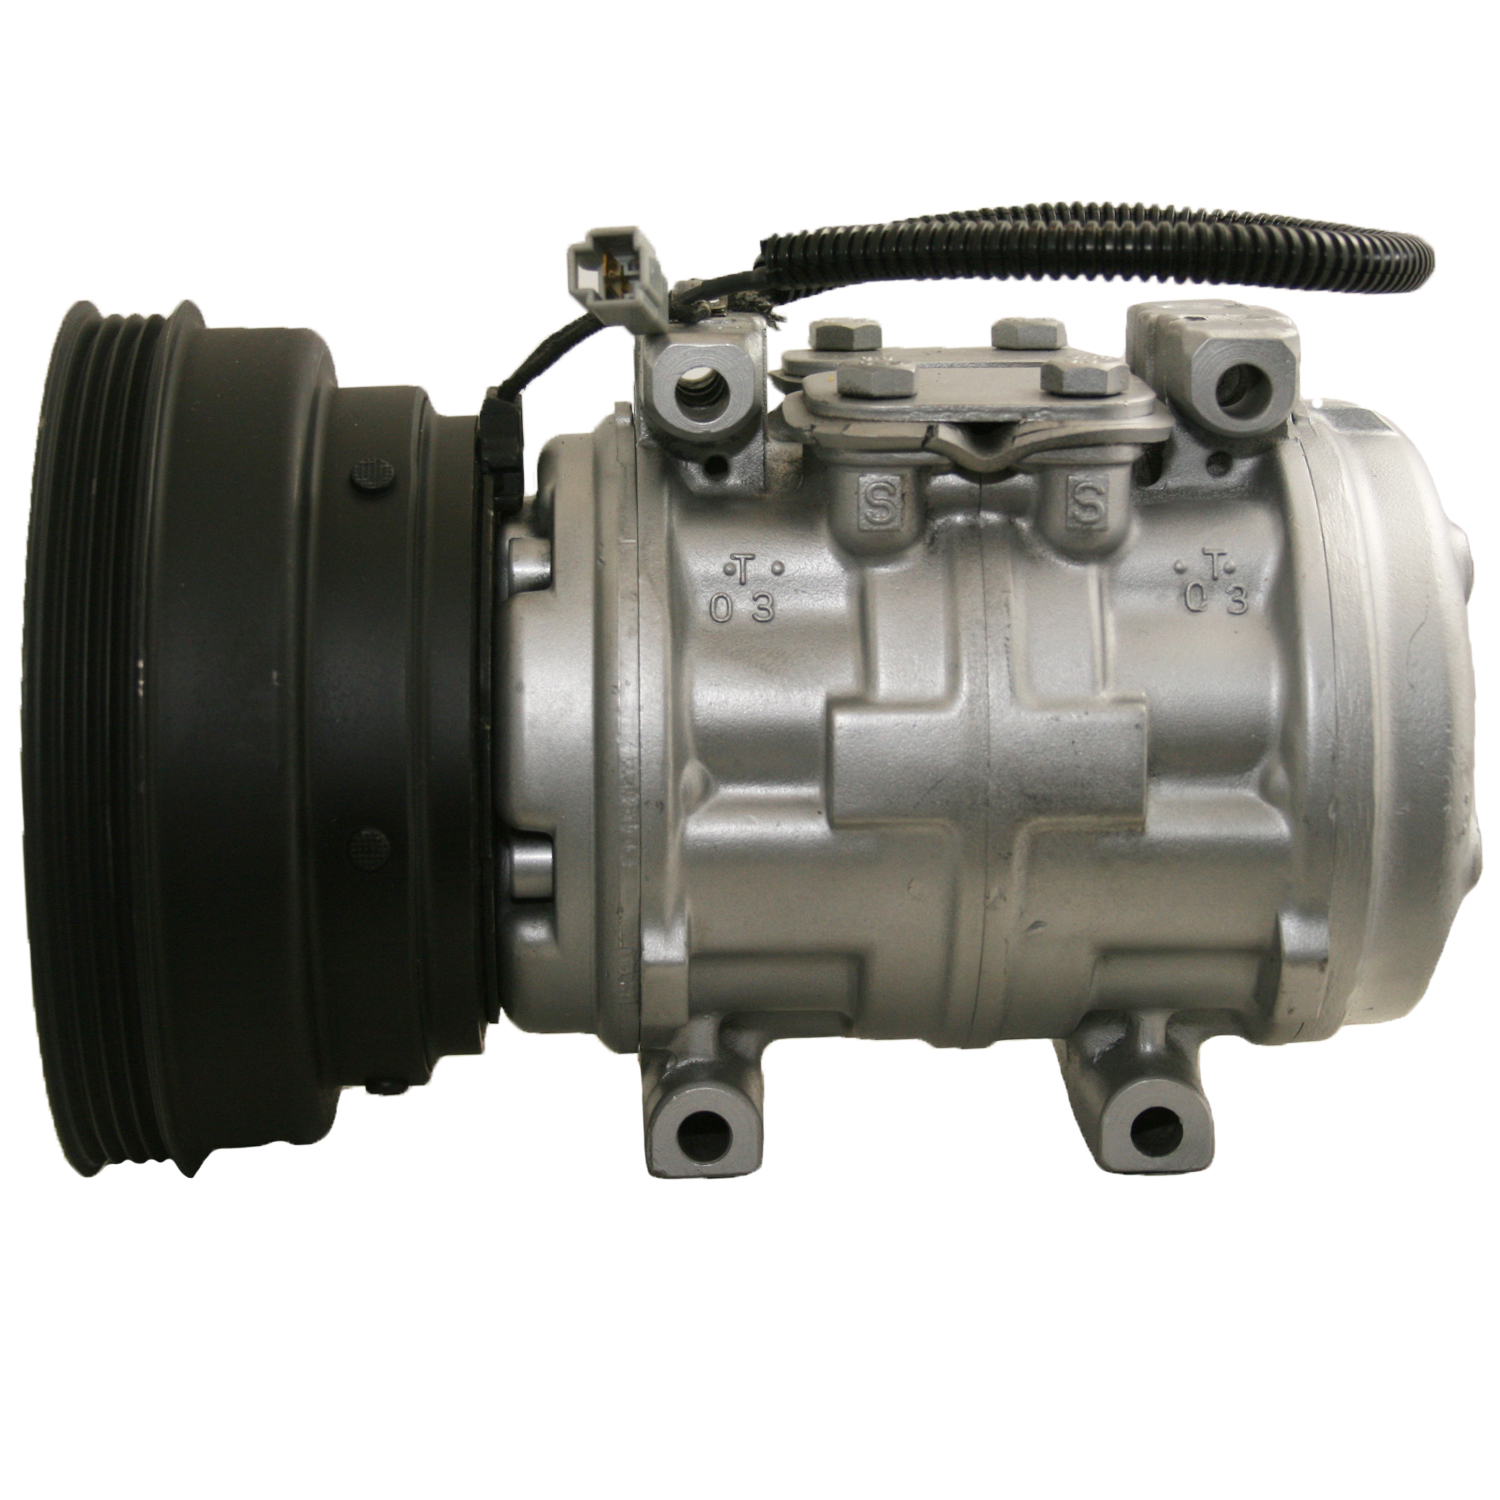 TCW Compressor 31030.402 Remanufactured Product Image field_60b6a13a6e67c